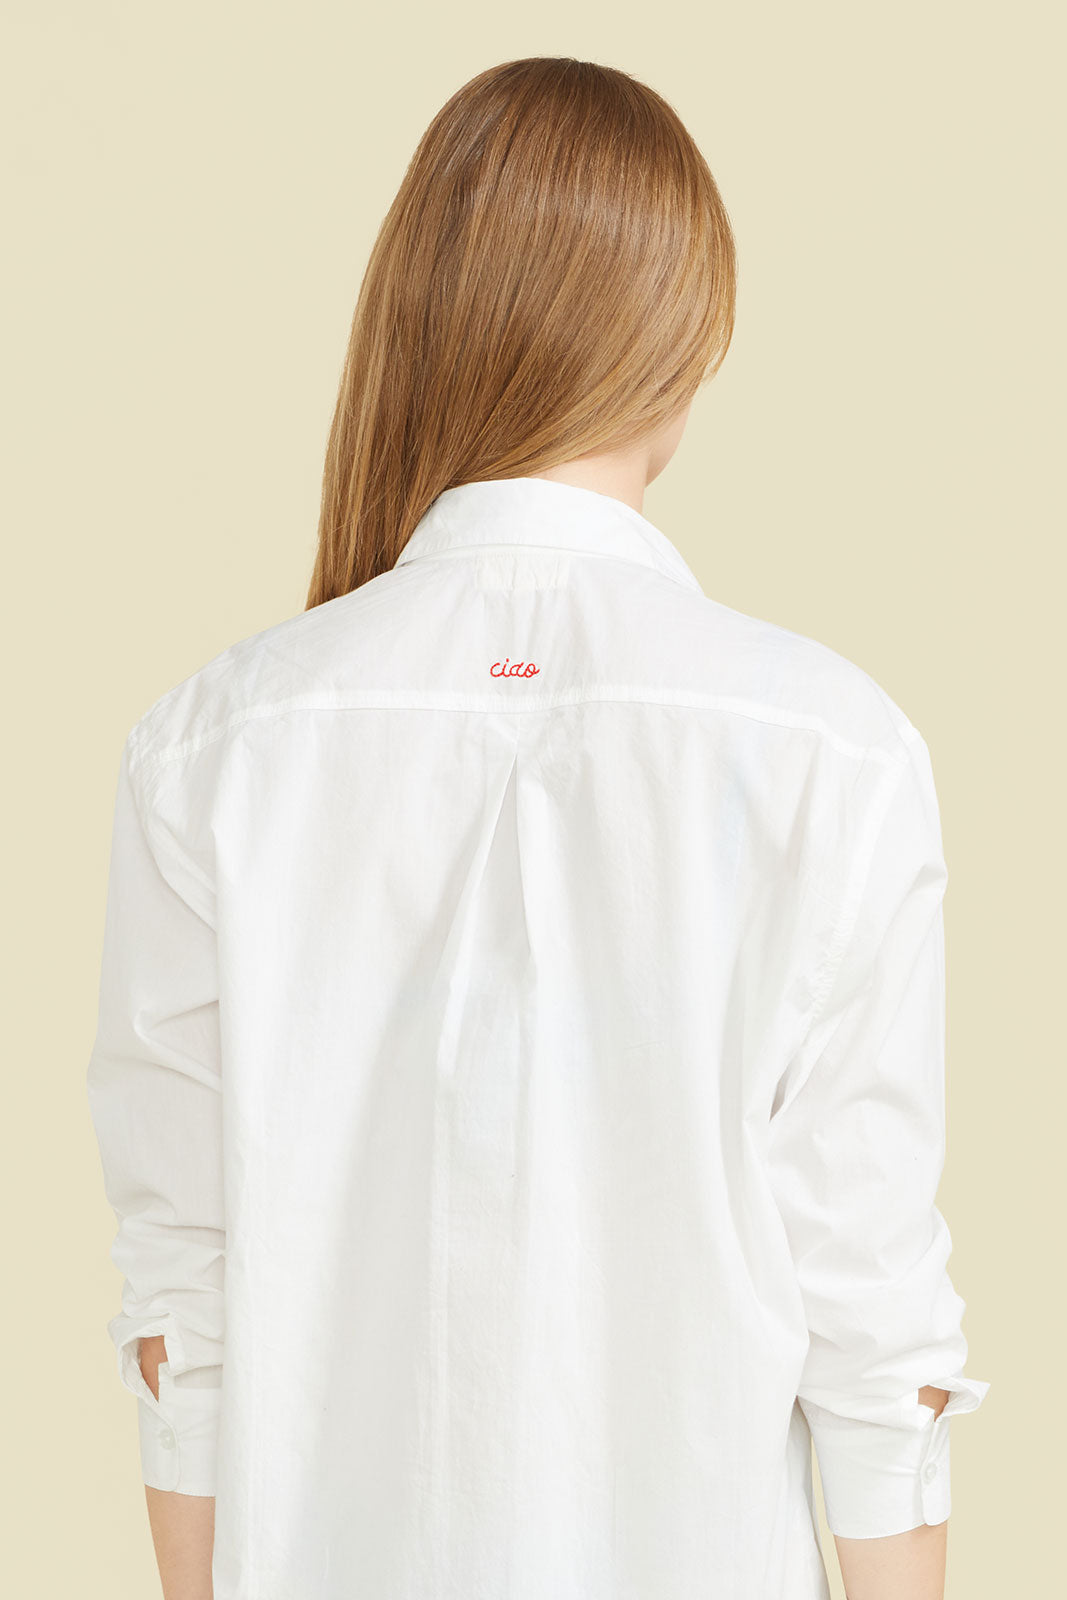 Ciao Shirt Dress - White by Sitano